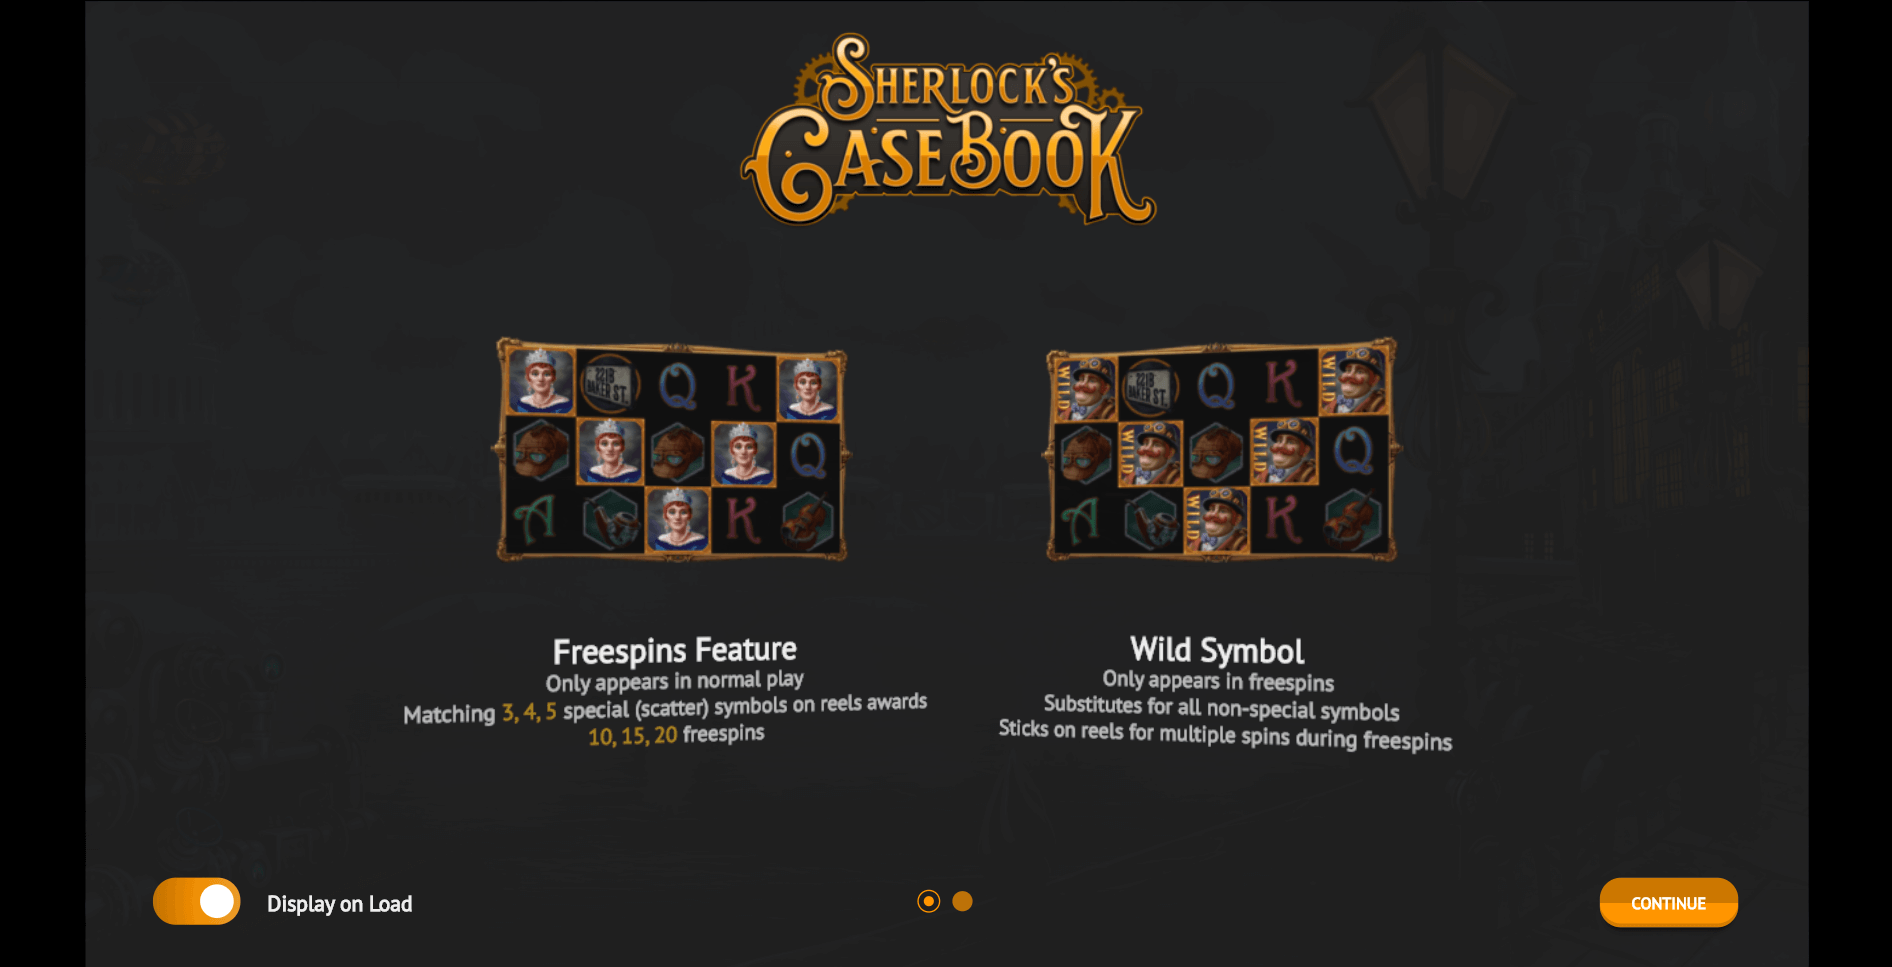 sherlocks casebook slot machine detail image 3